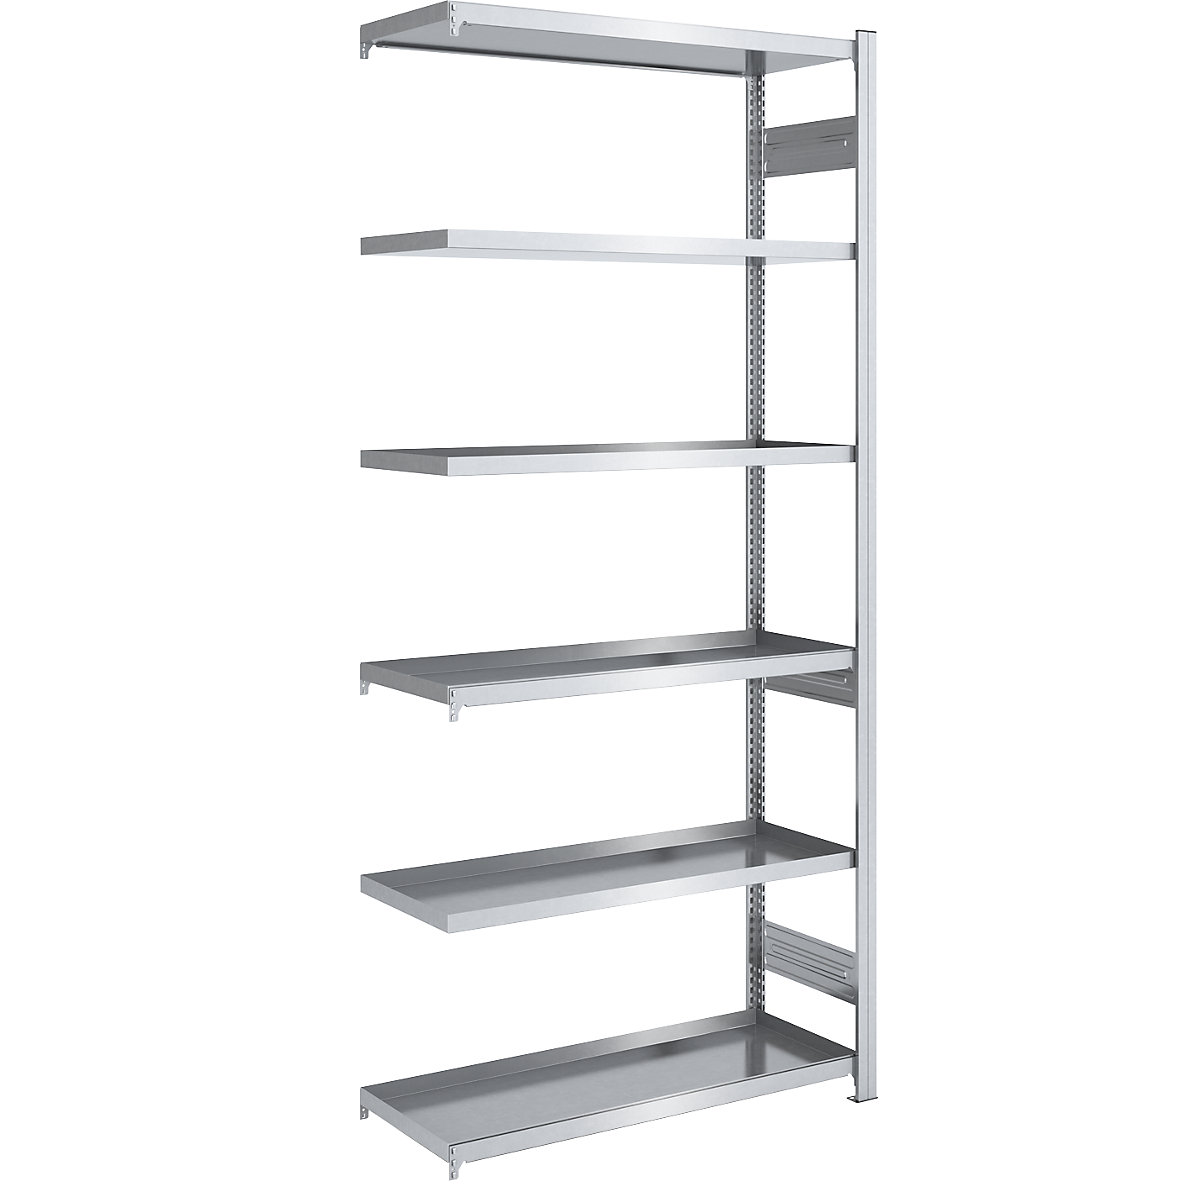 Tray shelf unit – hofe, shelf unit height 2500 mm, tray width 1000 mm, tray depth 500 mm, extension shelf unit